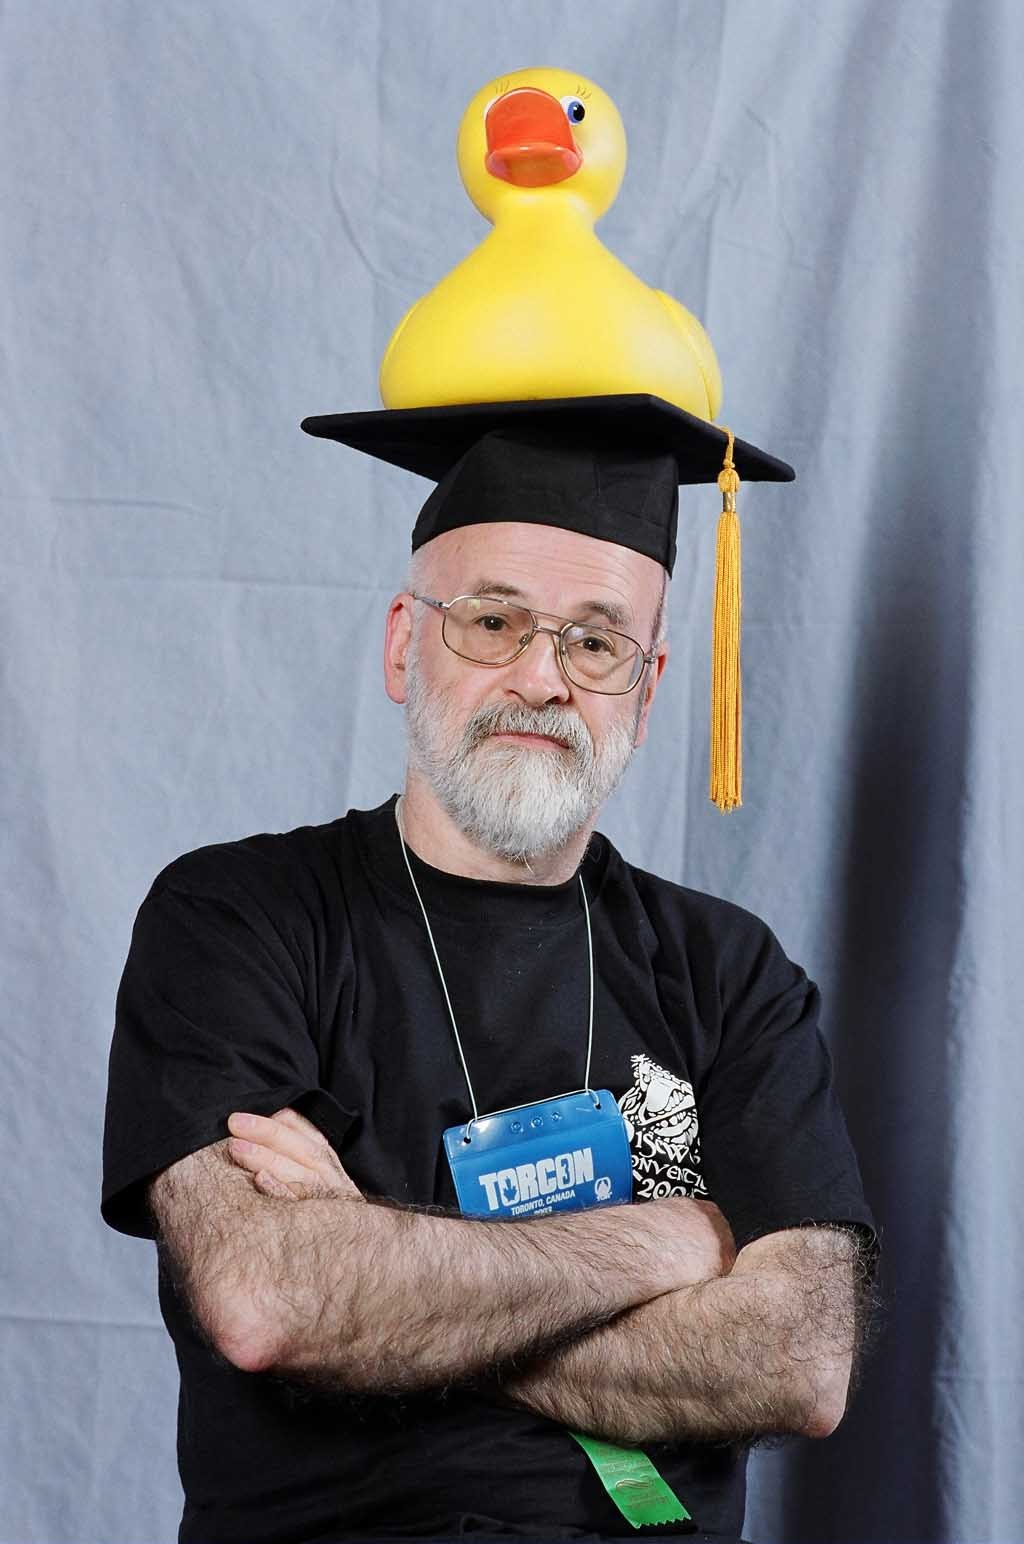 Sir Terry Pratchett OBE